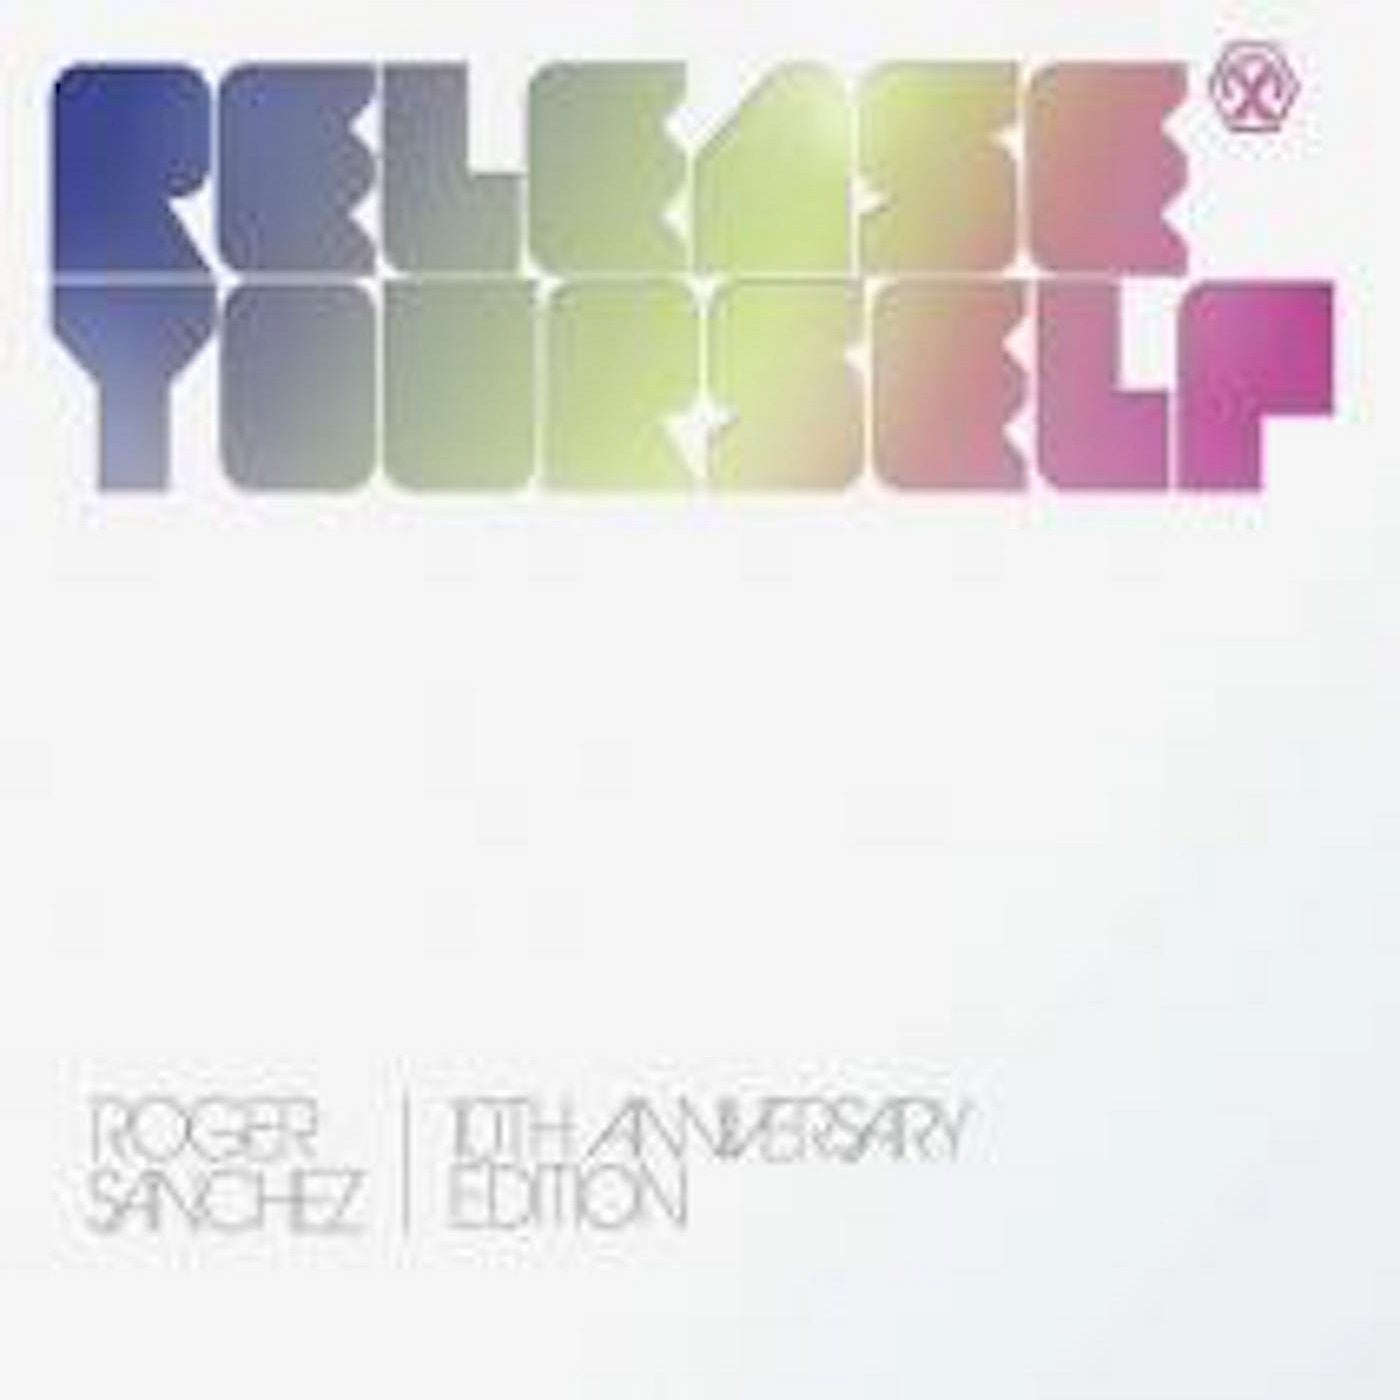 Roger Sanchez Presents Release Yourself Volume 10